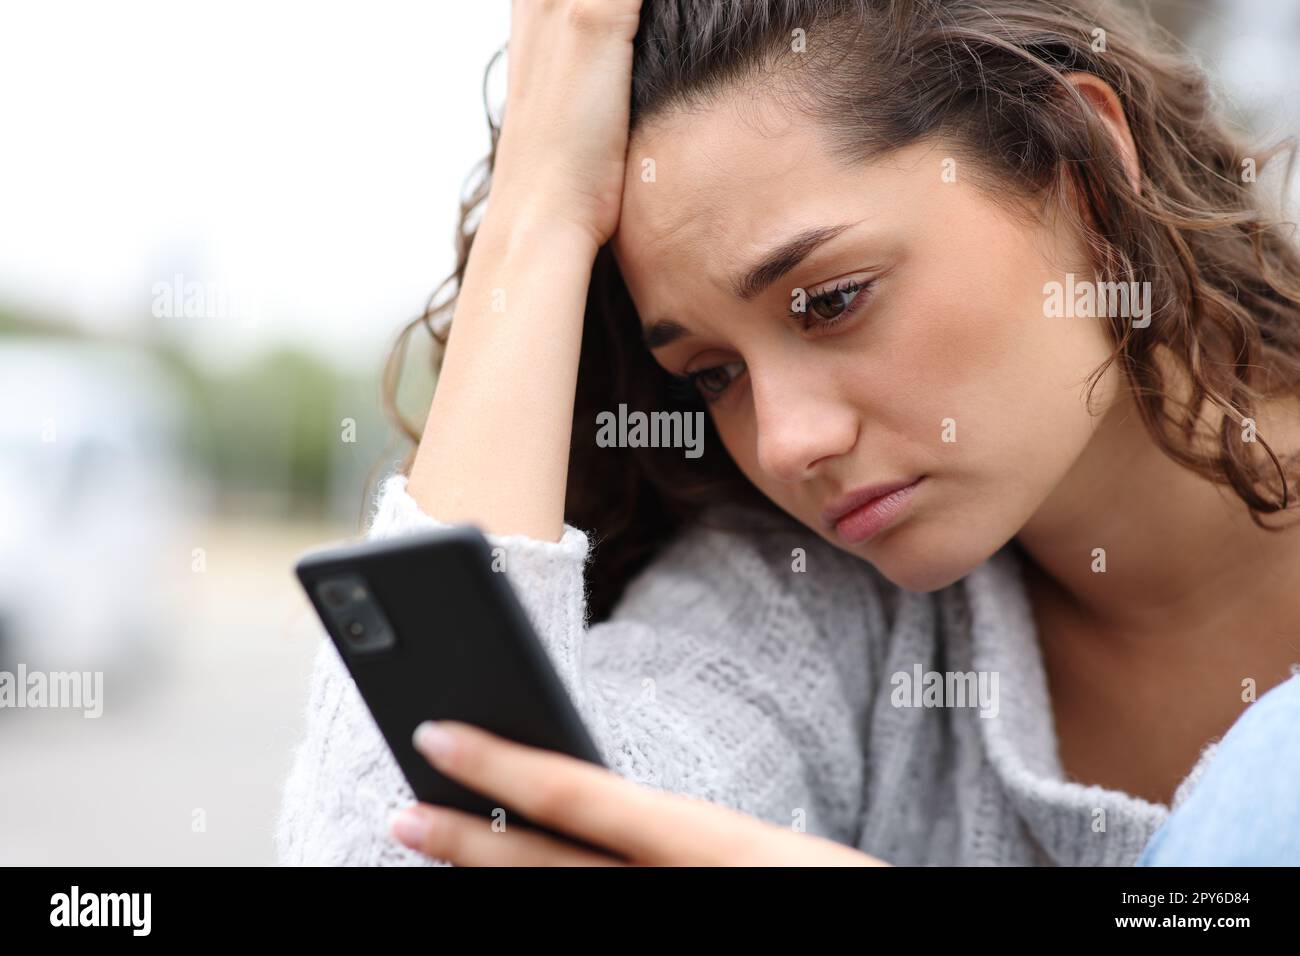 Sad woman checking phone message Stock Photo